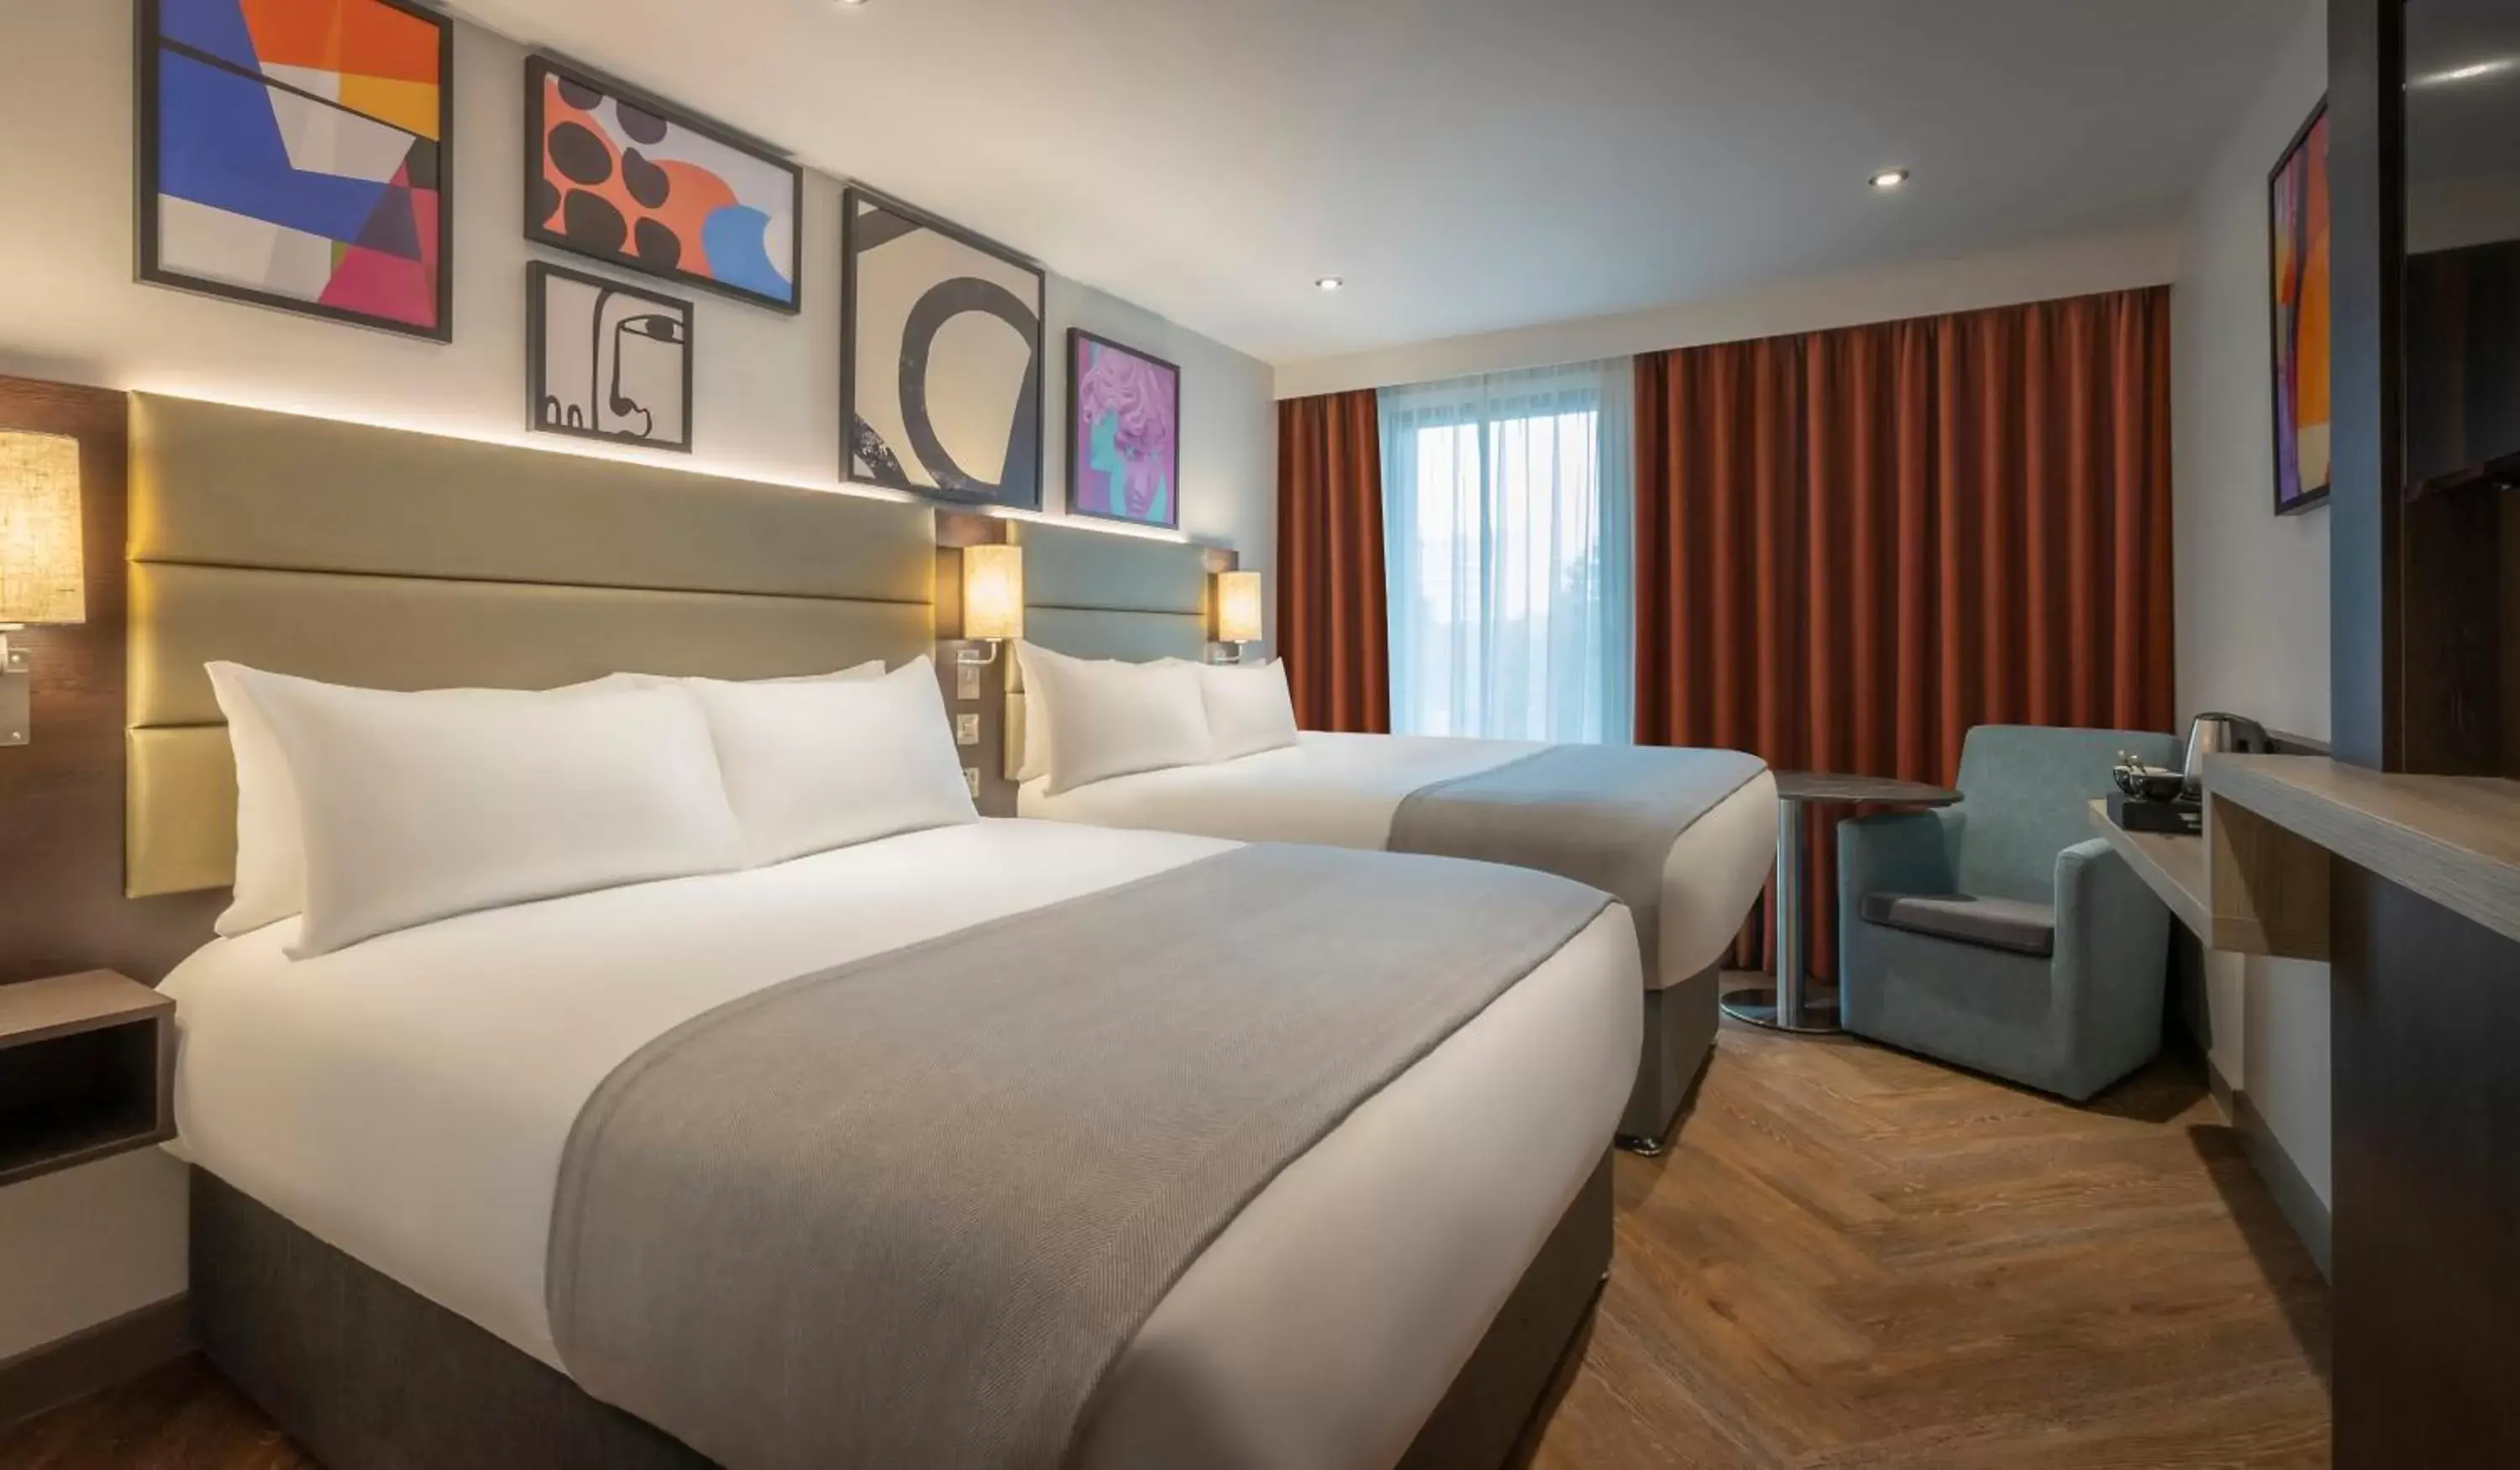 Bedroom, Bed in Maldron Hotel Finsbury Park, London